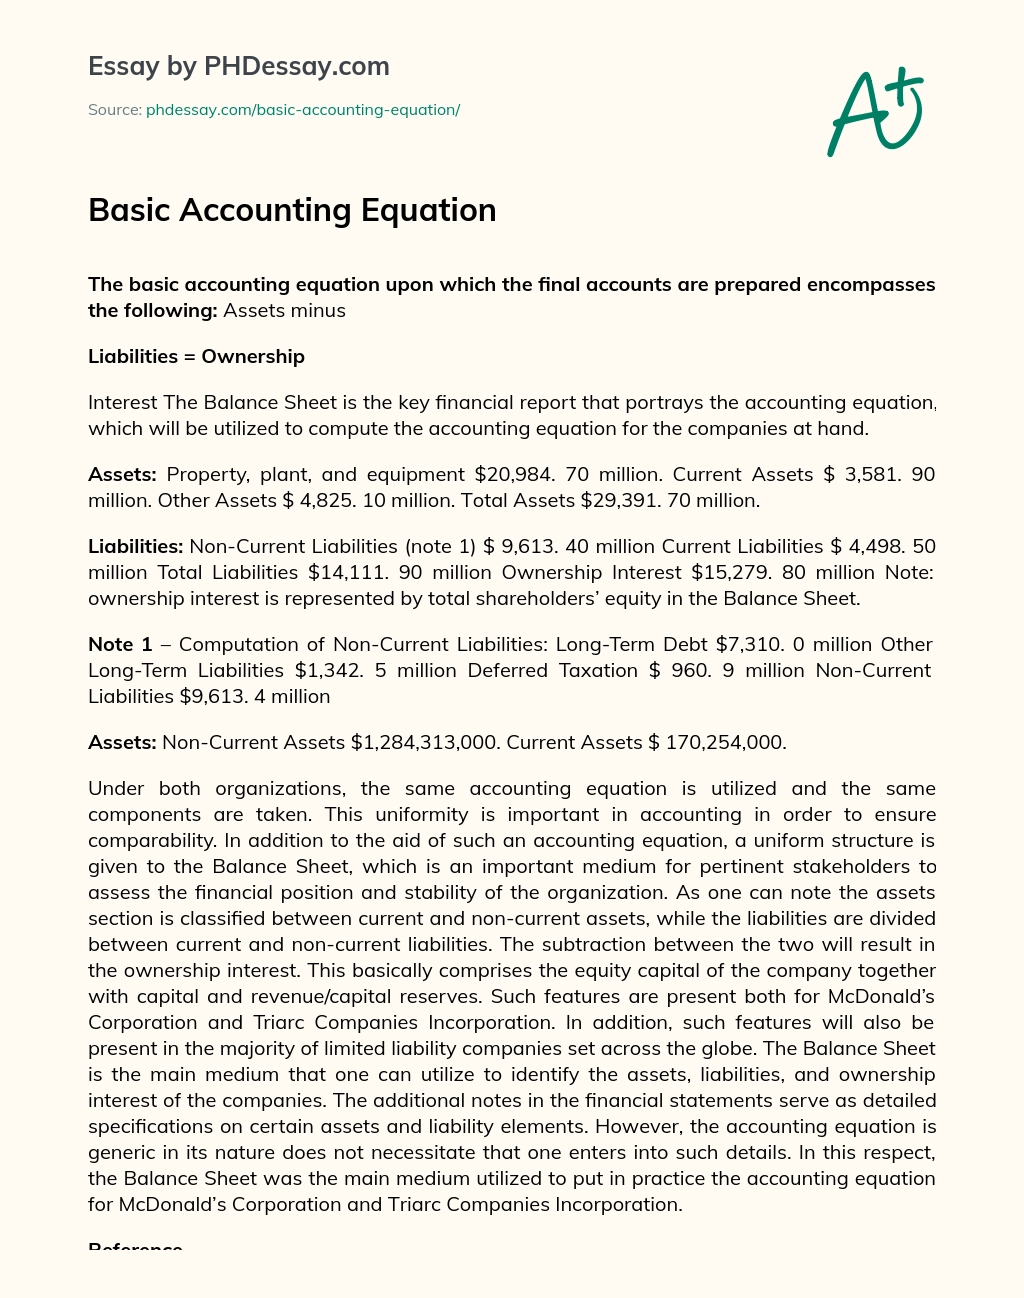 Basic Accounting Equation essay